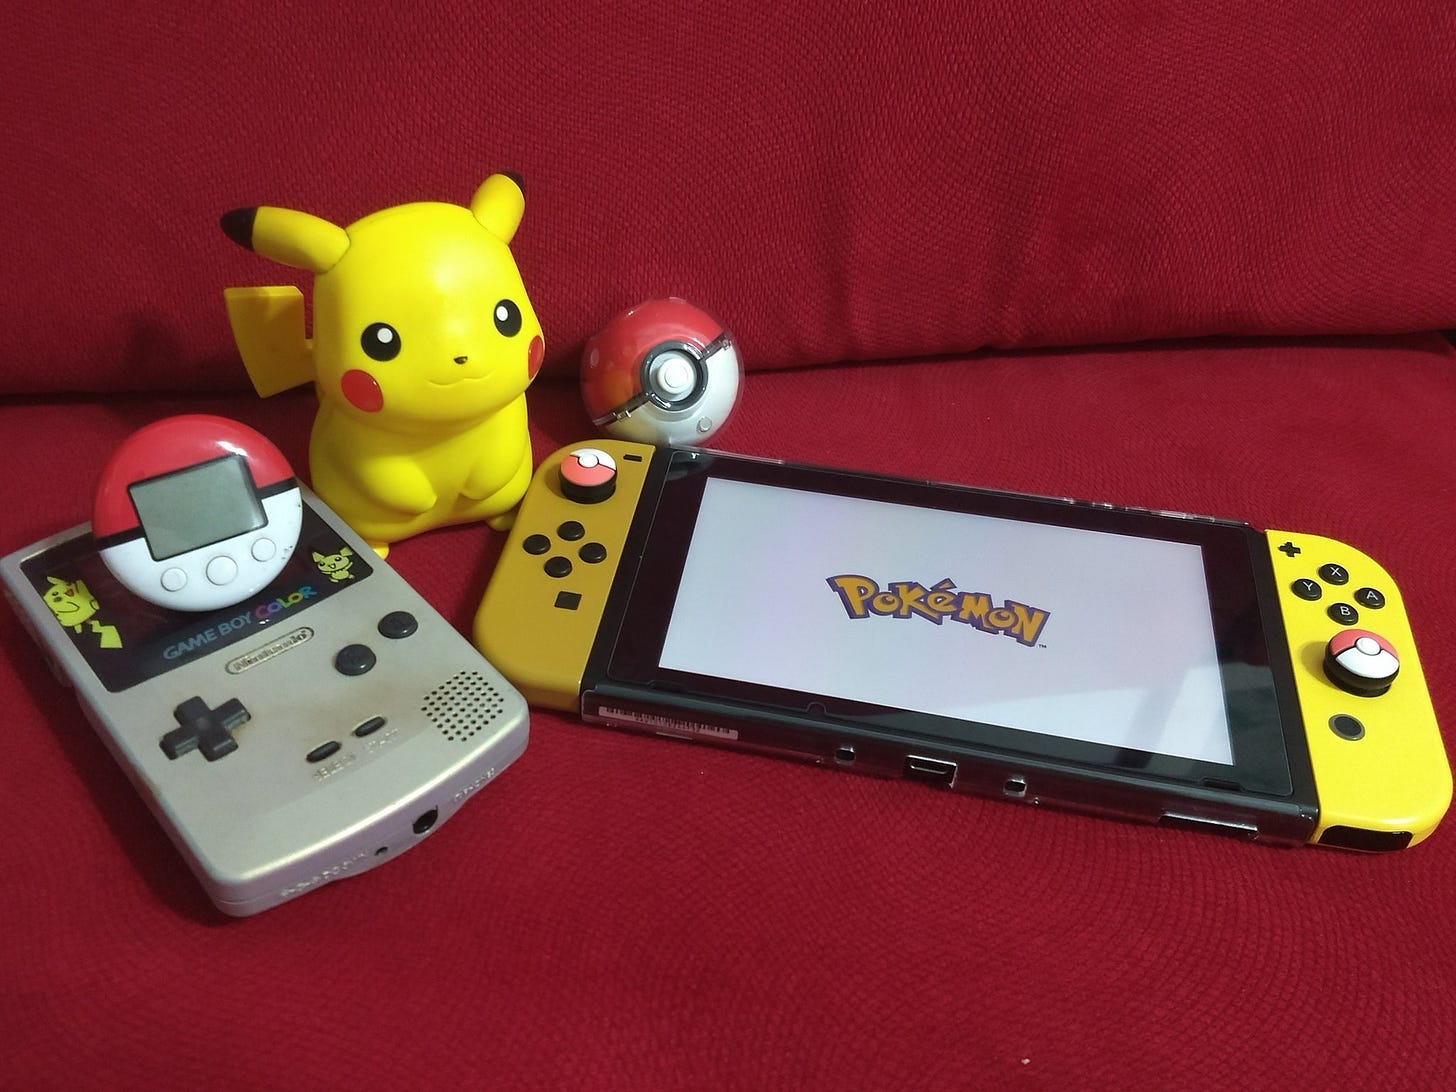 Rikki shared a photograph of some of his Pokémon belongings, including a Pokémon-themed Nintendo Switch, Pokéwalker, Poké Ball Plus, a Pikachu figure, and his original Game Boy Color console, featuring Pikachu and Pichu.